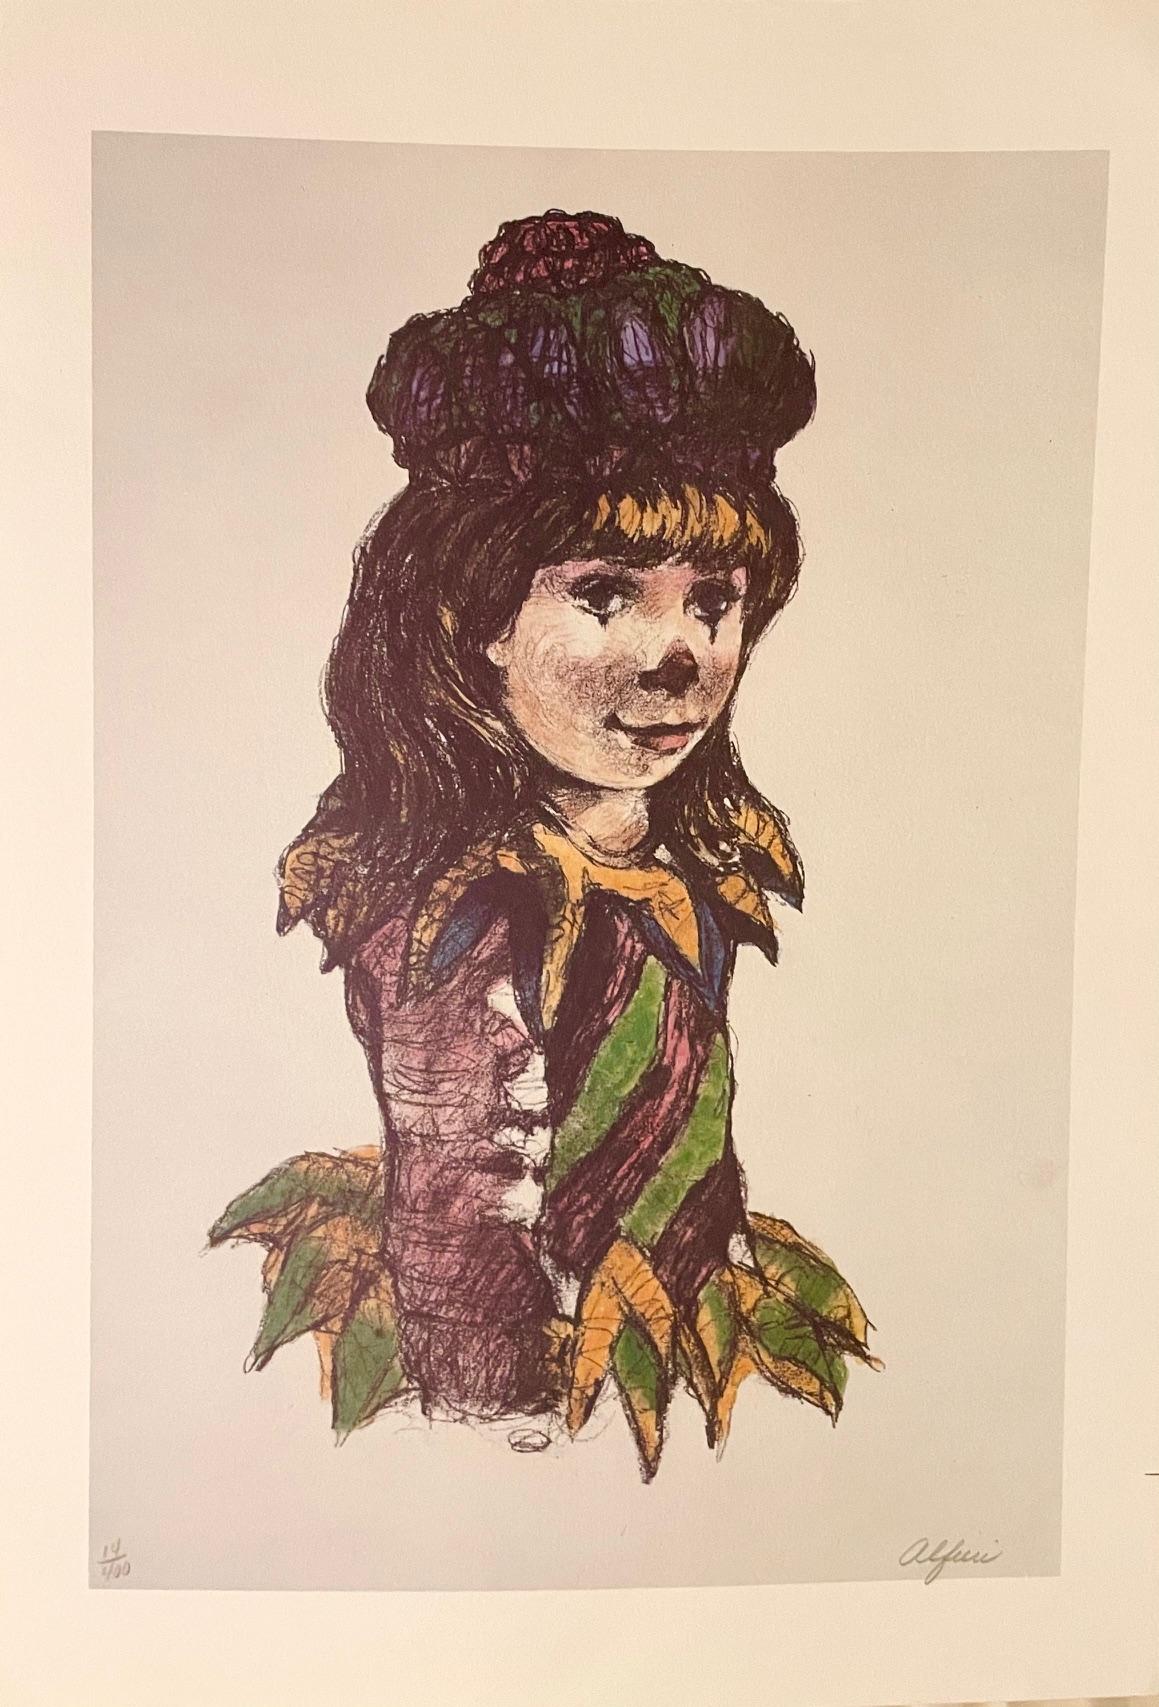 Unknown Portrait Print - Harlequin Clown entitled "Little Queen" by Philippe Alfieri